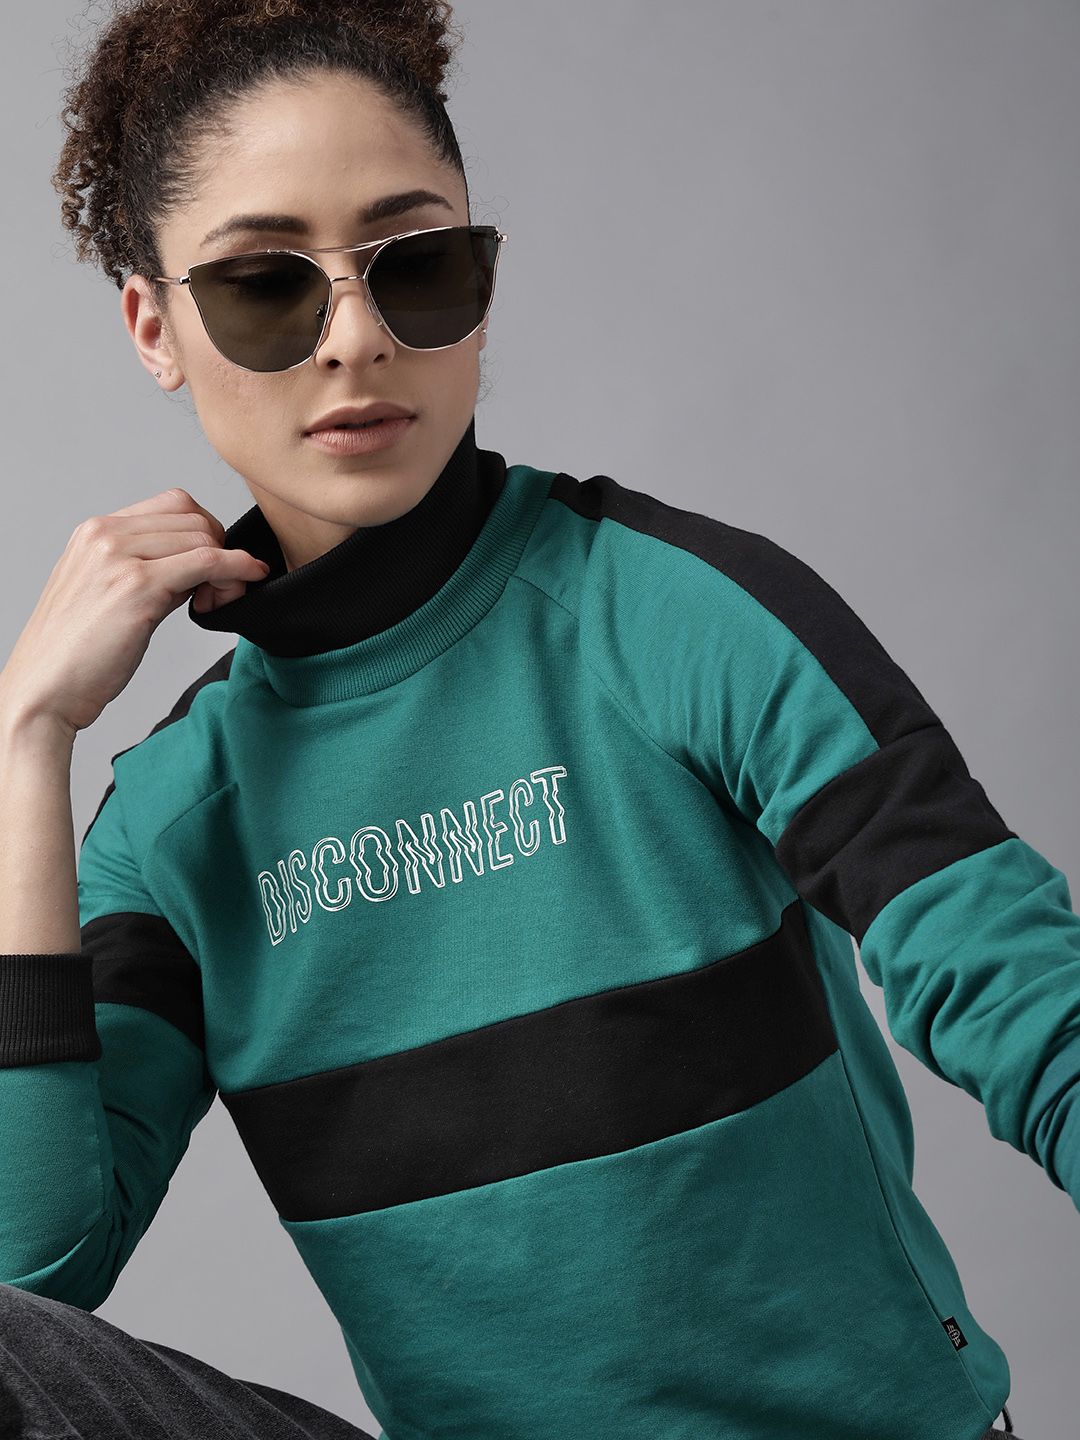 Roadster Women Green & Black Colourblocked Sweatshirt Price in India